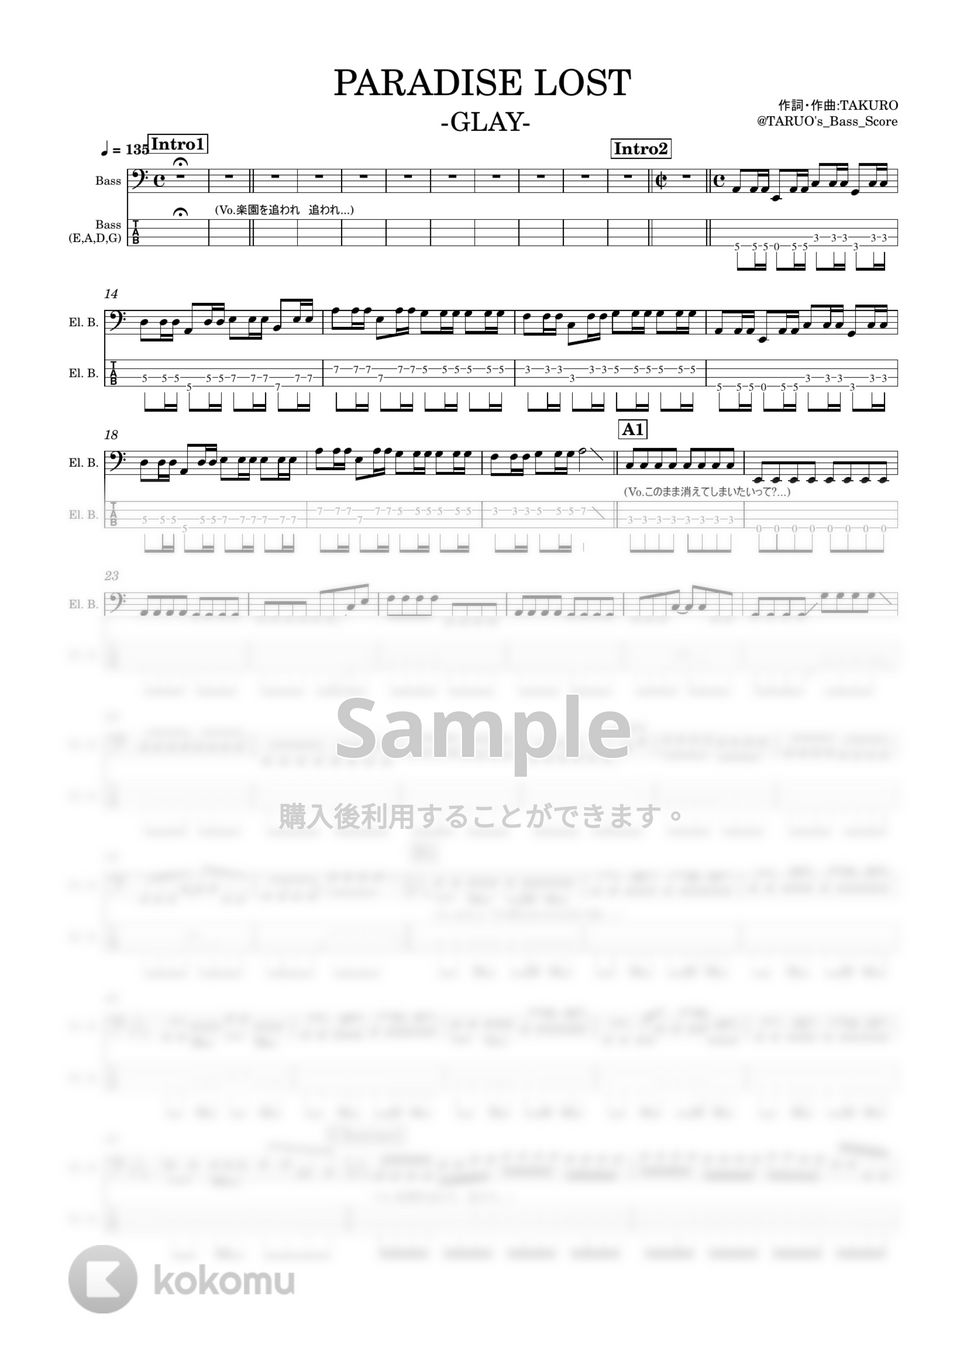 GLAY - PARADISE LOST (ベース/TAB/GLAY) by TARUO's_Bass_Score